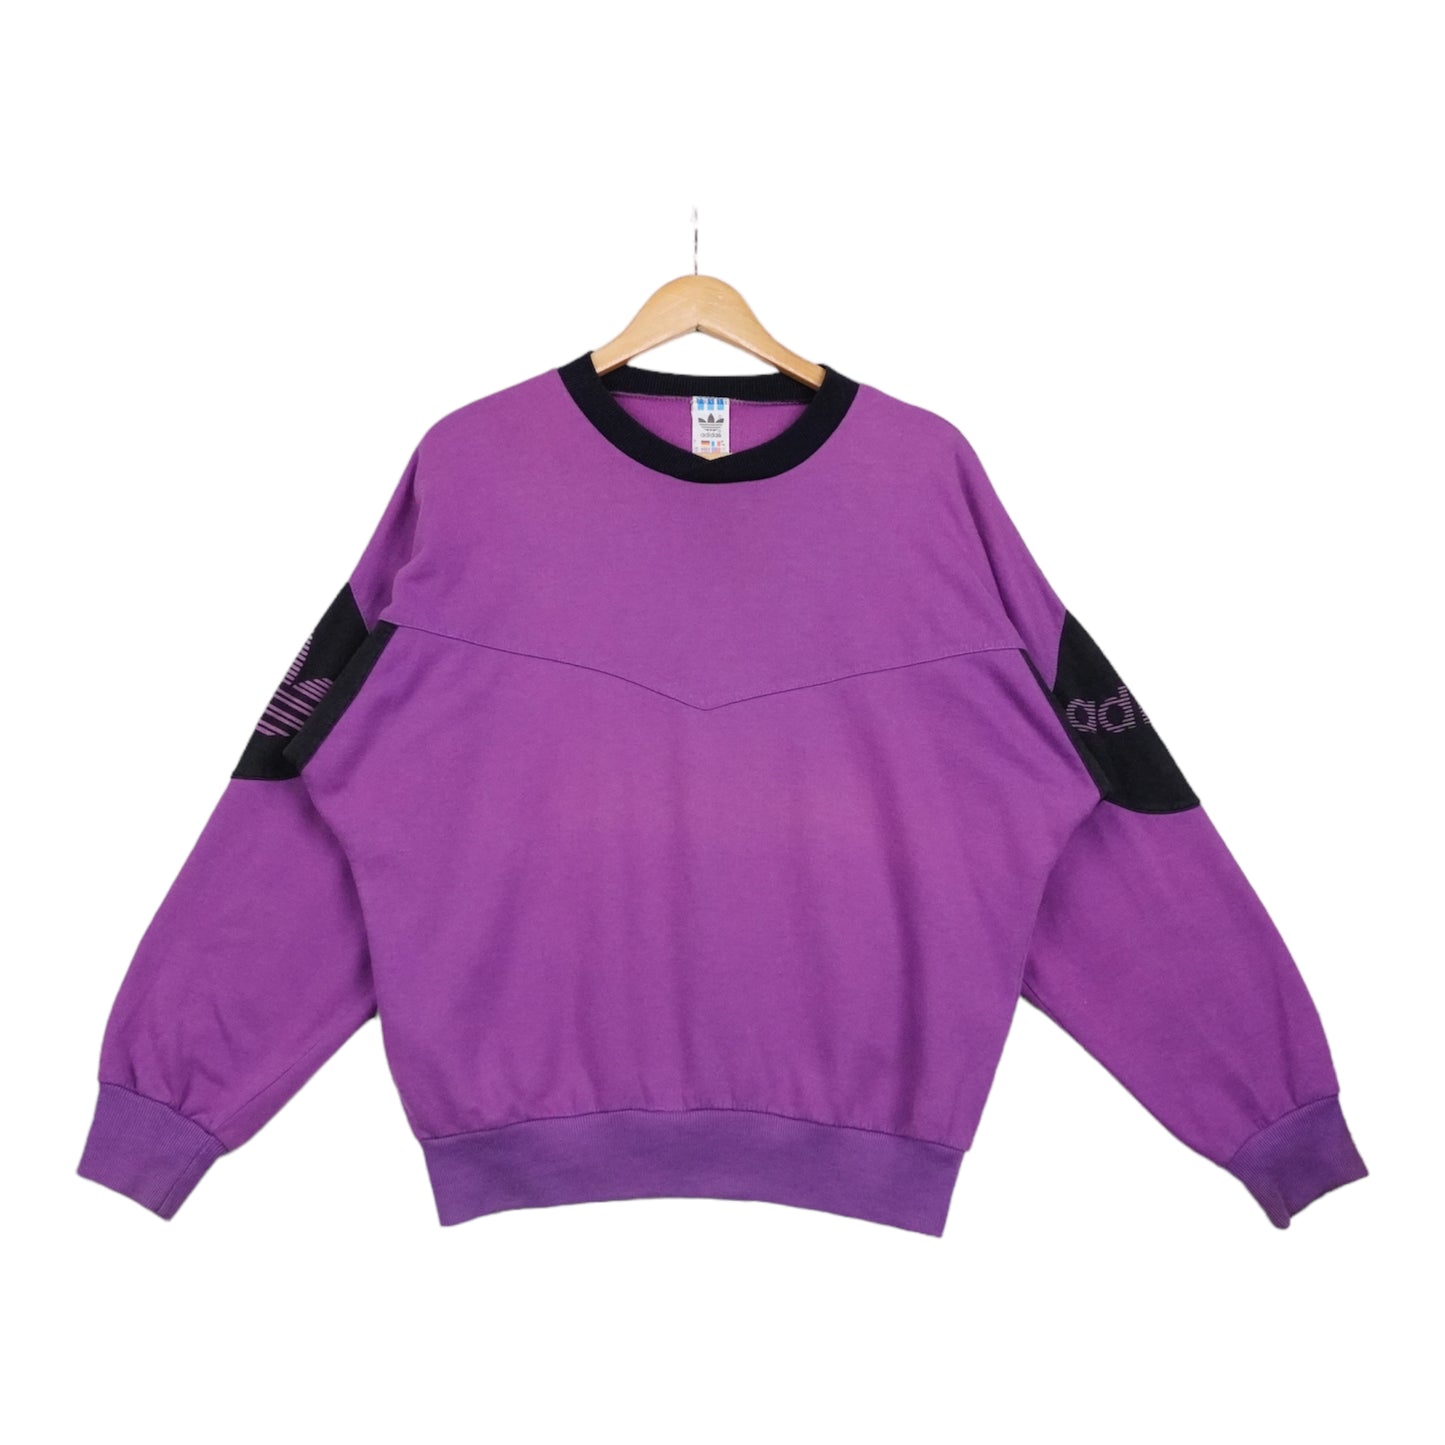 00s Adidas Sweatshirt Purple Black S/M